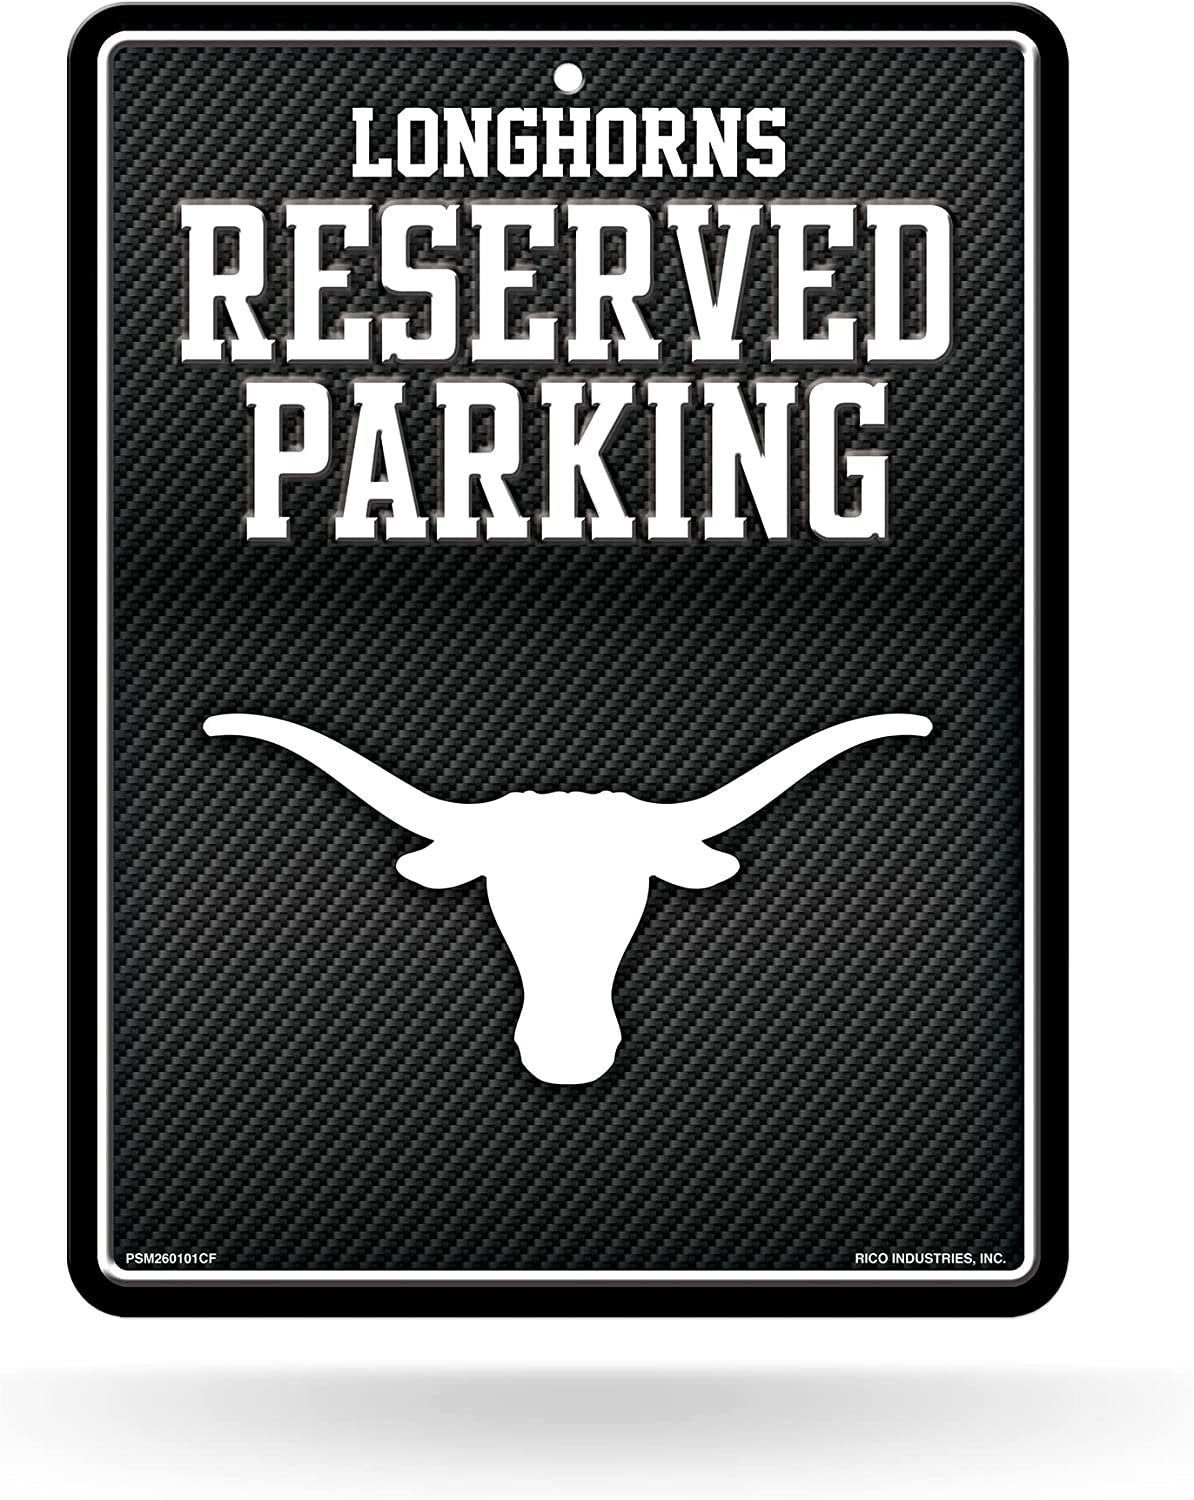 University of Texas Longhorns Metal Parking Novelty Wall Sign 8.5 x 11 Inch Carbon Fiber Design